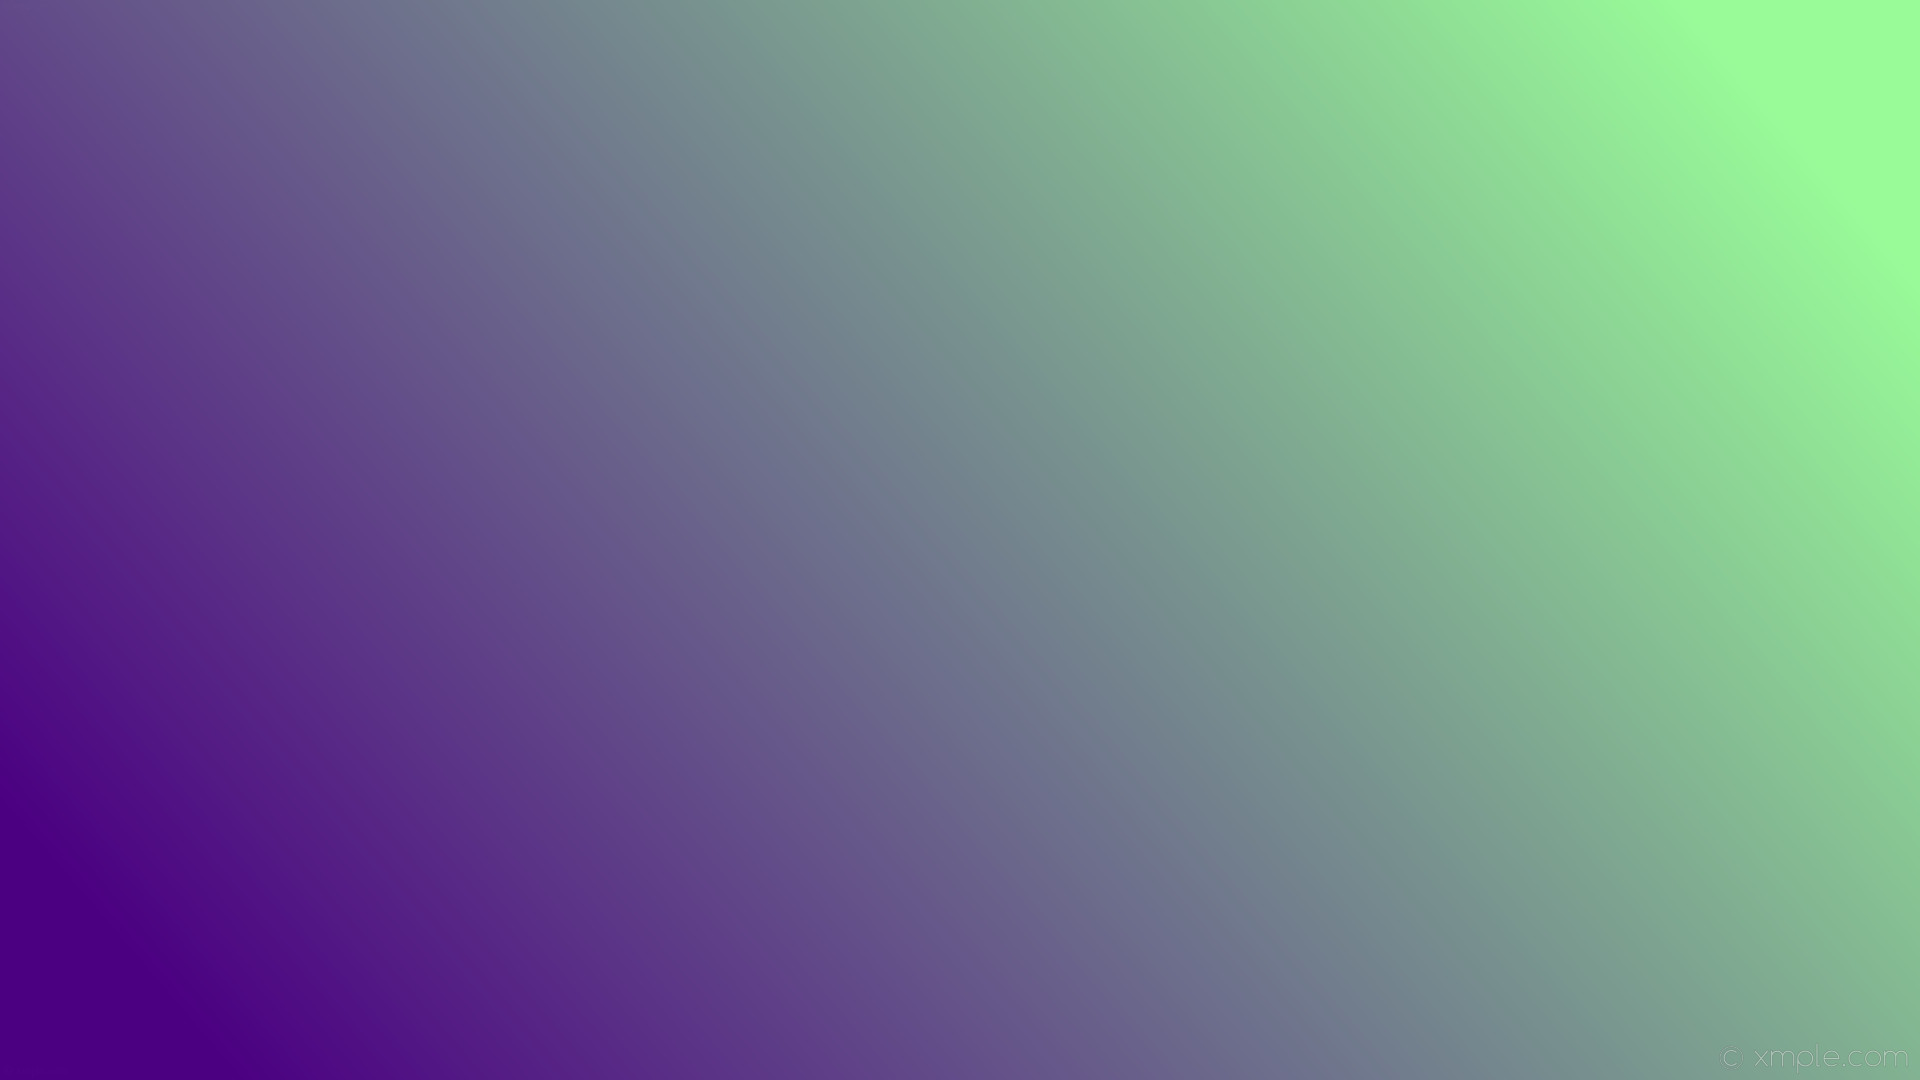 1920x1080 wallpaper linear gradient green purple pale green indigo #98fb98 #4b0082 15Â°